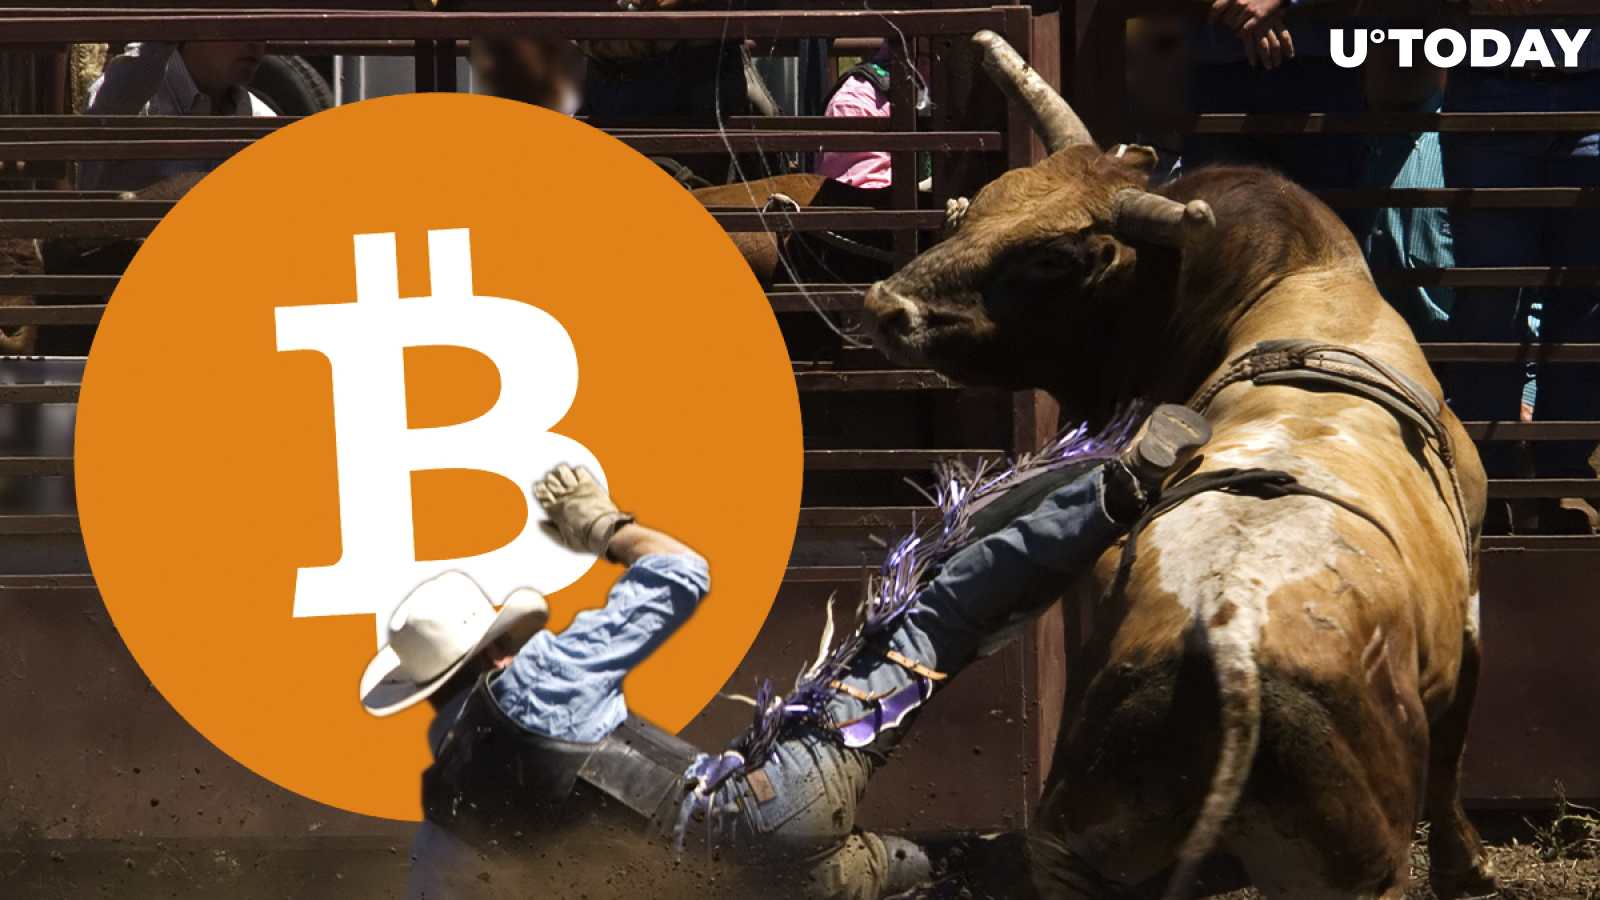 Bitcoin’s Bullish Model ‘Not Econometric at All’ Says Analyst